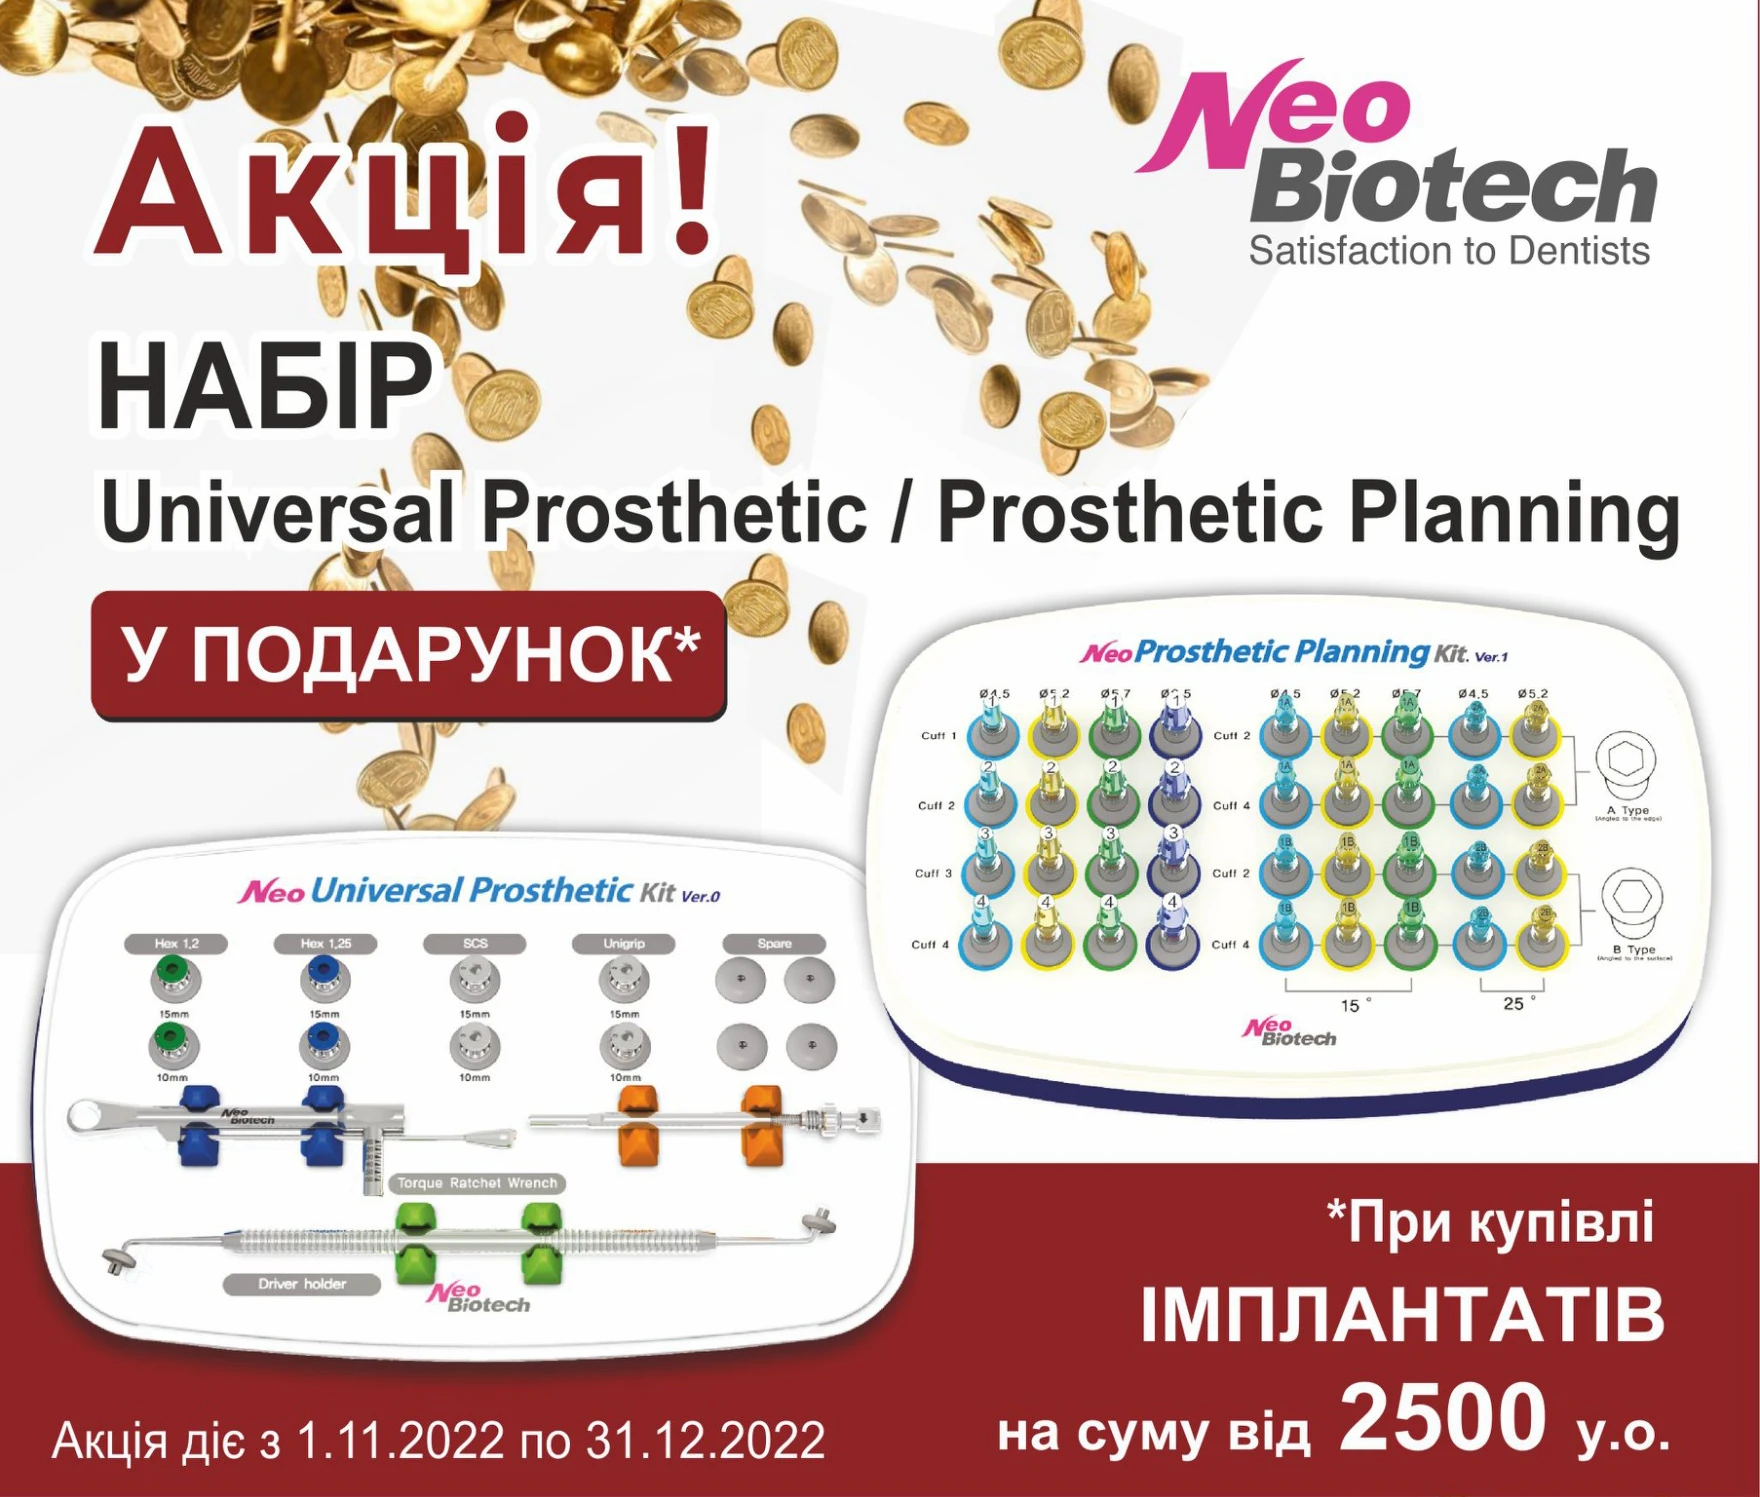 Наборы Universal Prosthetic и Prosthetic Planning NeoBiotech